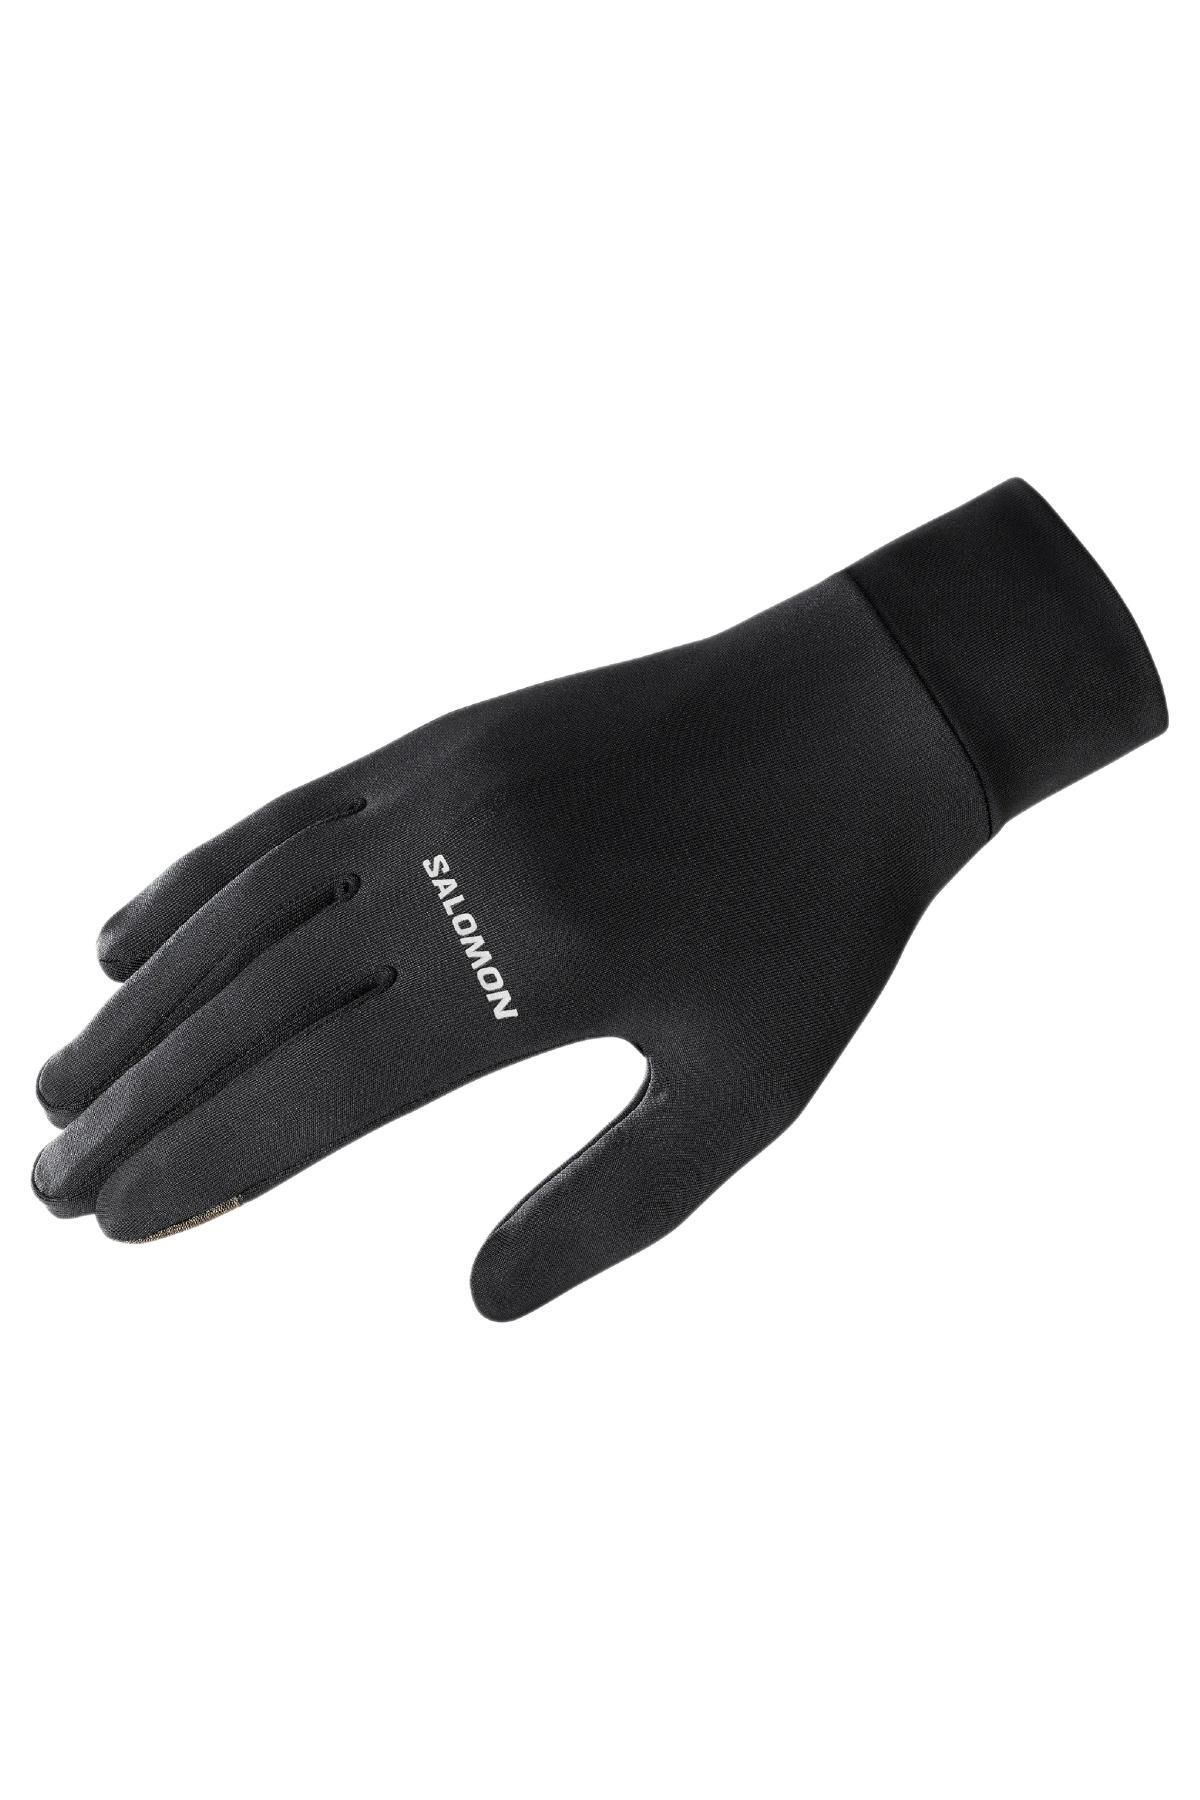 Salomon Lc1897600 Cross Warm Glove U Eldiven Siyah Unisex Eldiven